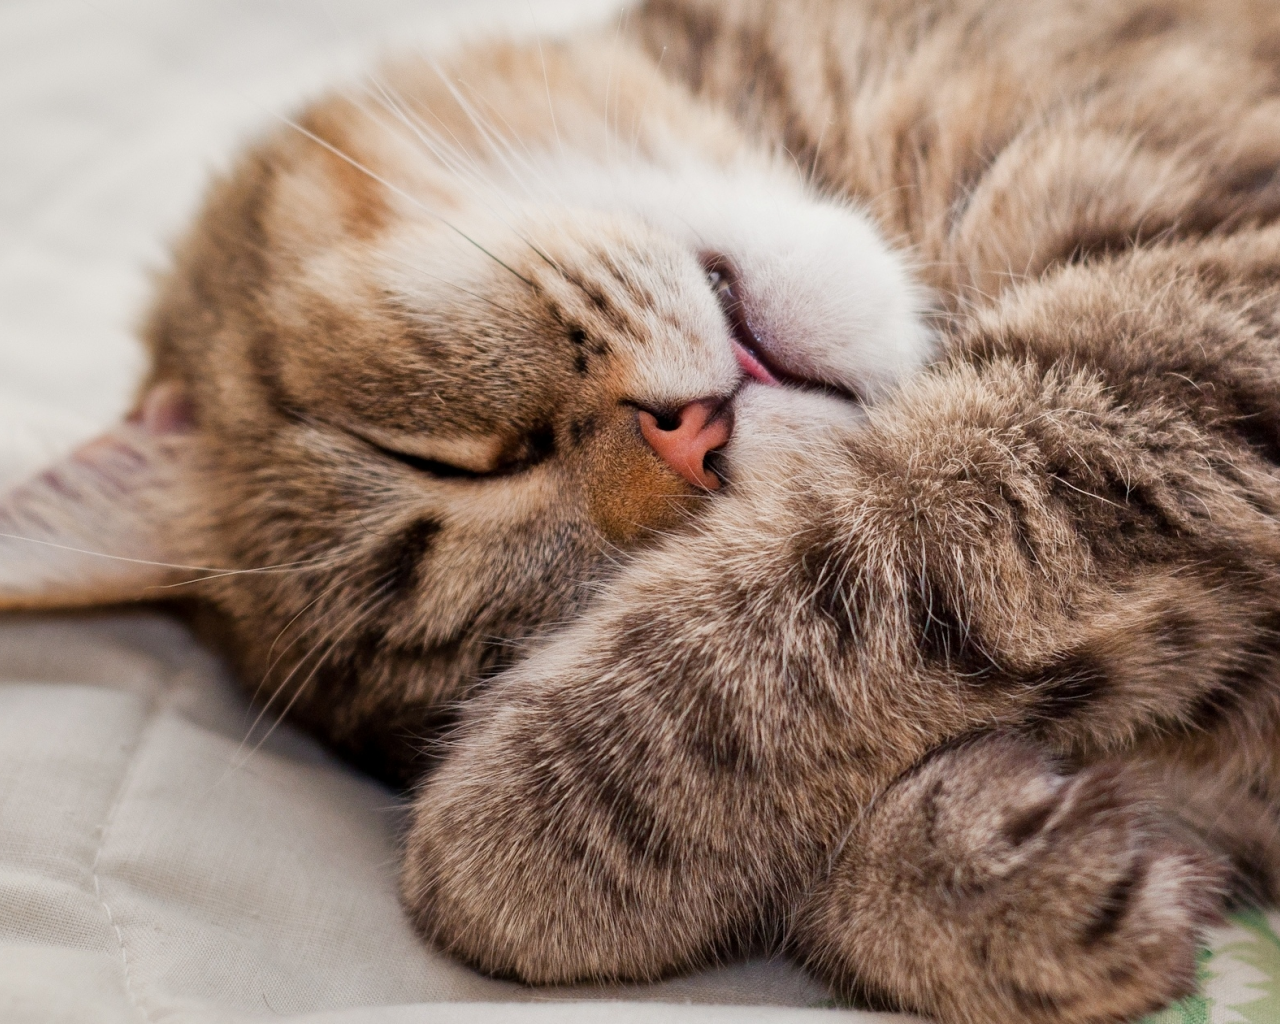 кошка, спит, лежит, мордочка, Кот, лапки